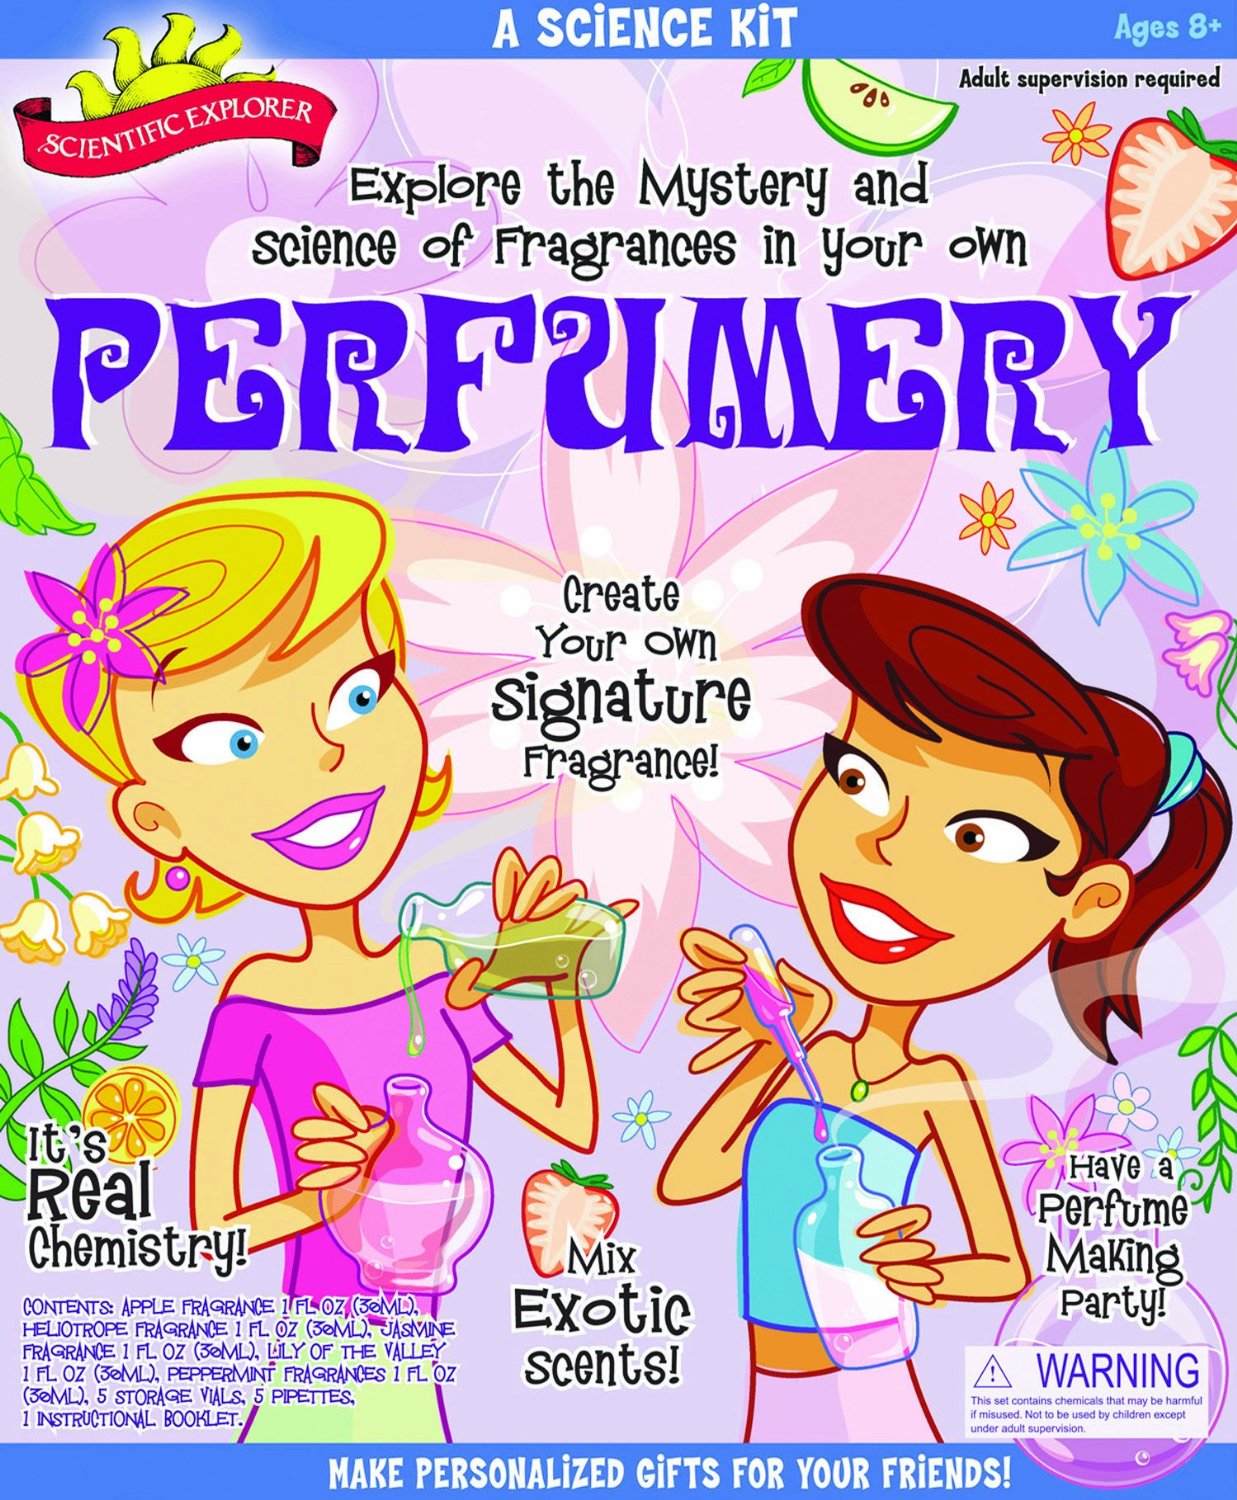 Perfumery Science Kit